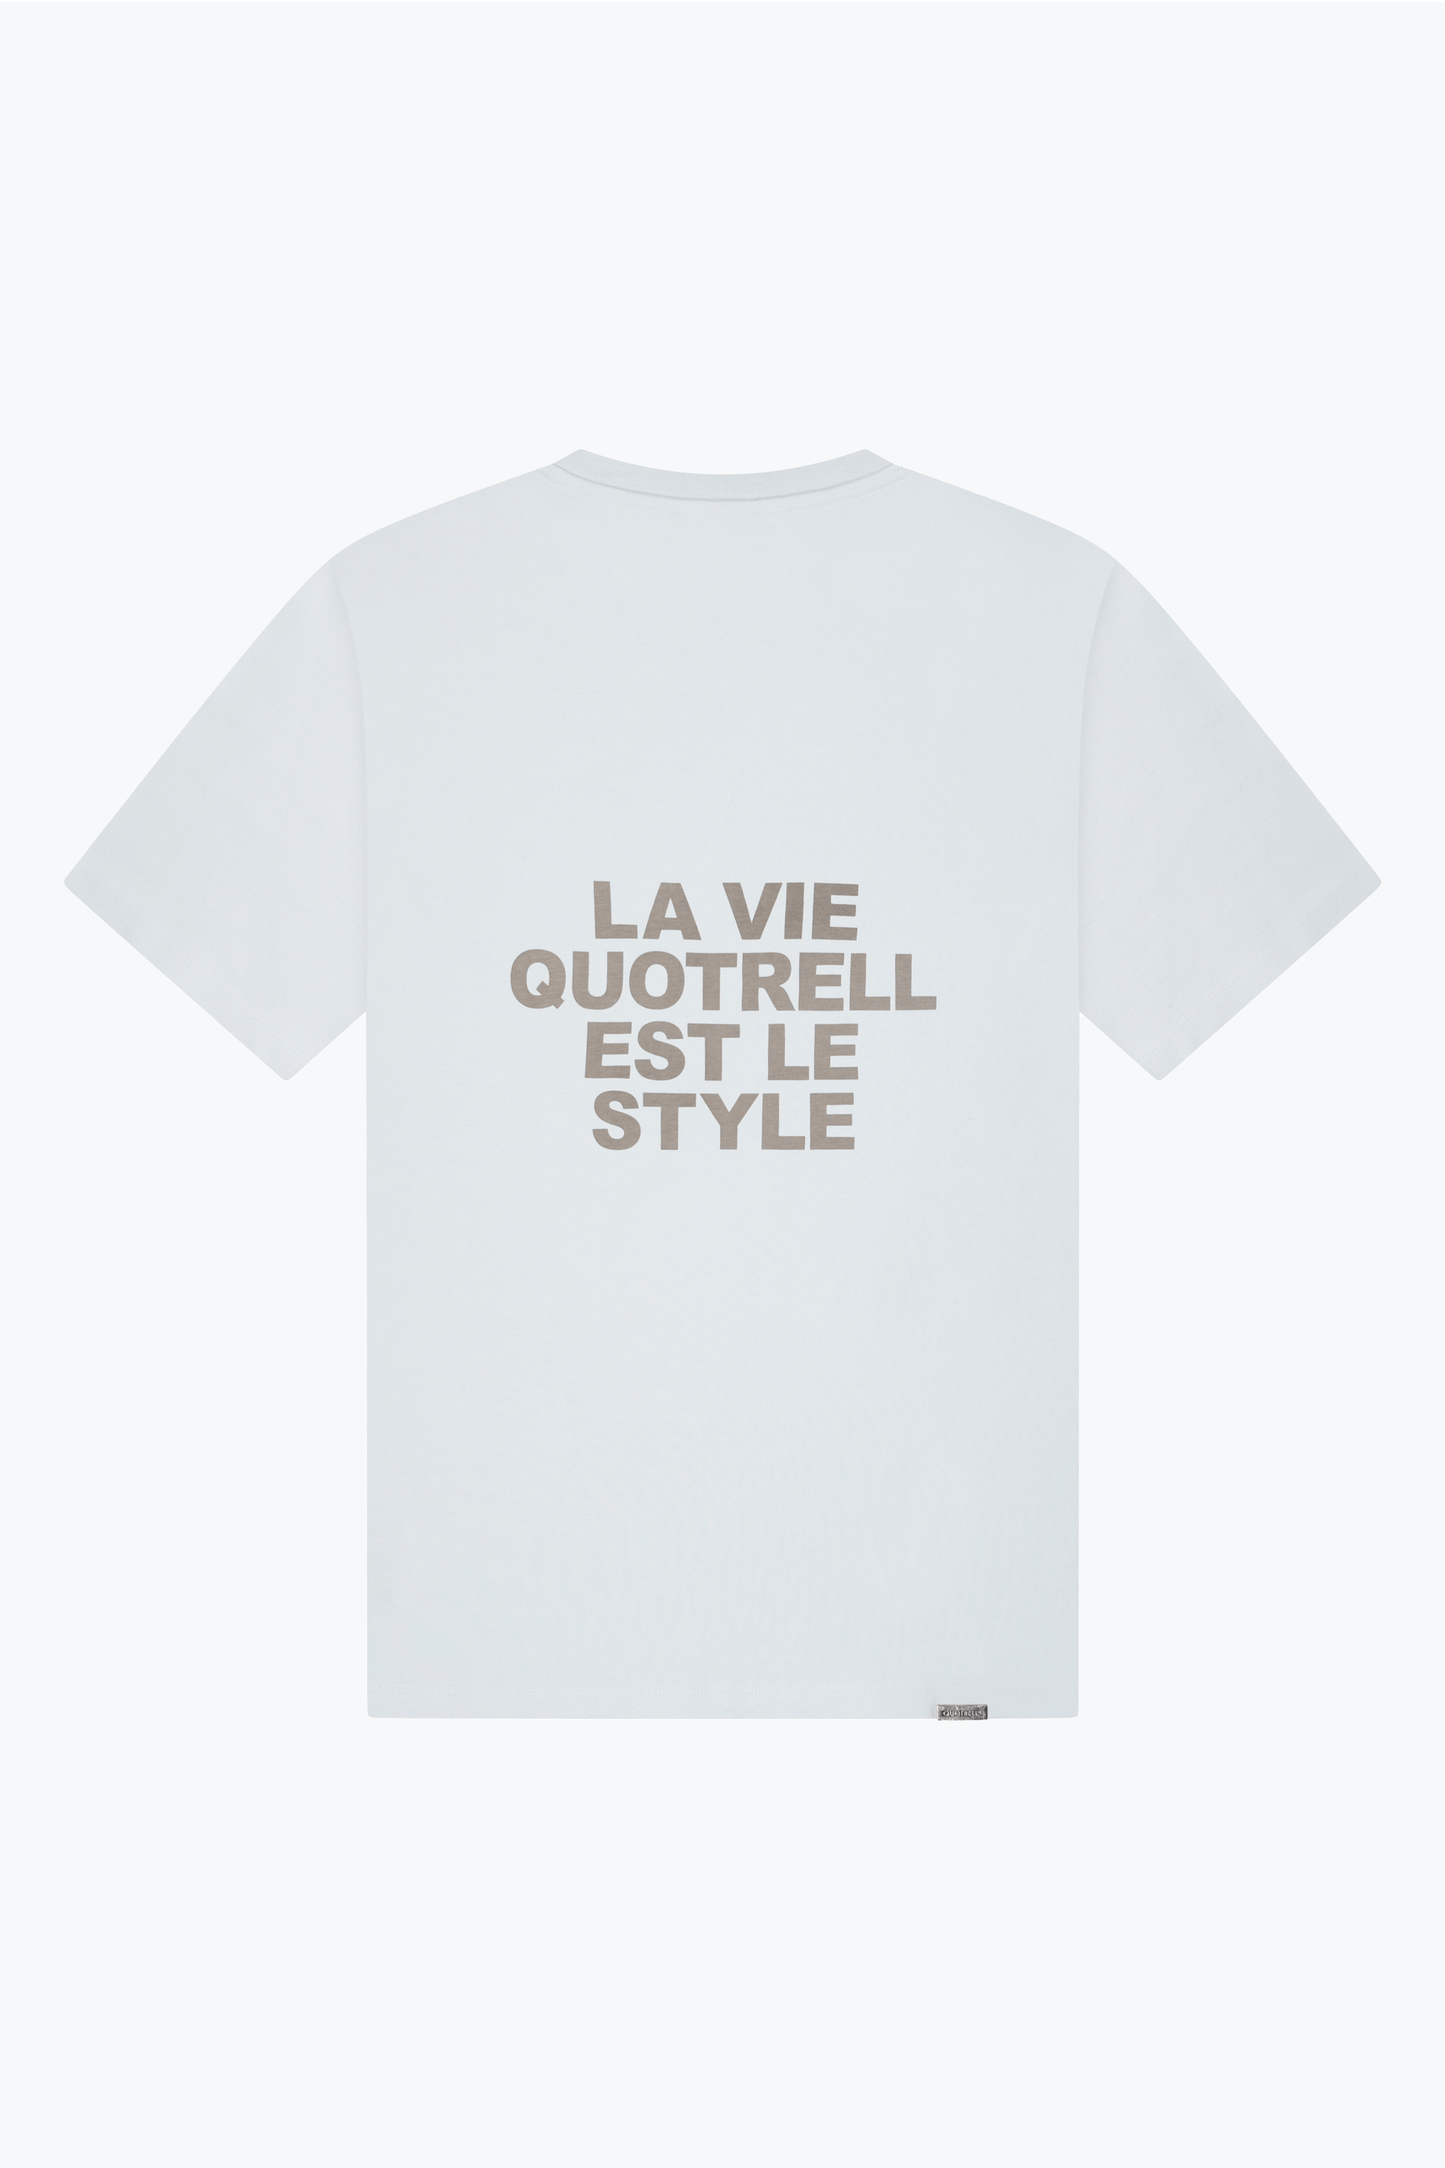 Quotrell la vie t-shirt - light blue/grey